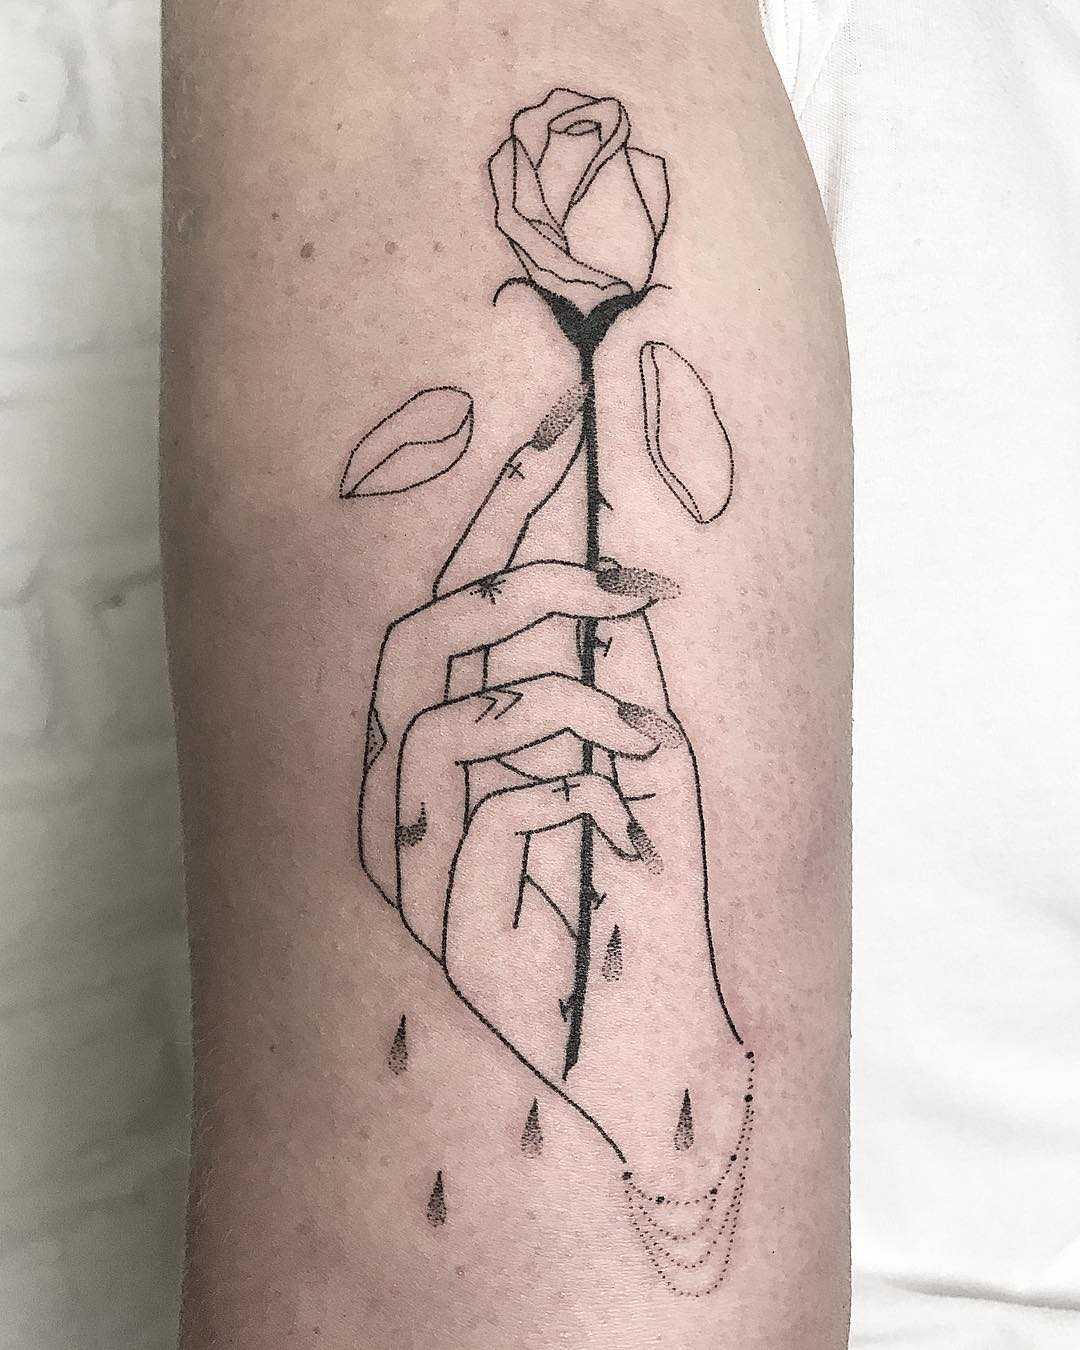 Tattoo uploaded by Liz Venom • A #pinkrose tattoo I did in #california # roses #rose #flower #floral #inkedgirls #feminine #girly #pretty  #floribunda #botanical #posy #vintage #arm #forearm #color #colour #canada  #australia #canadian #